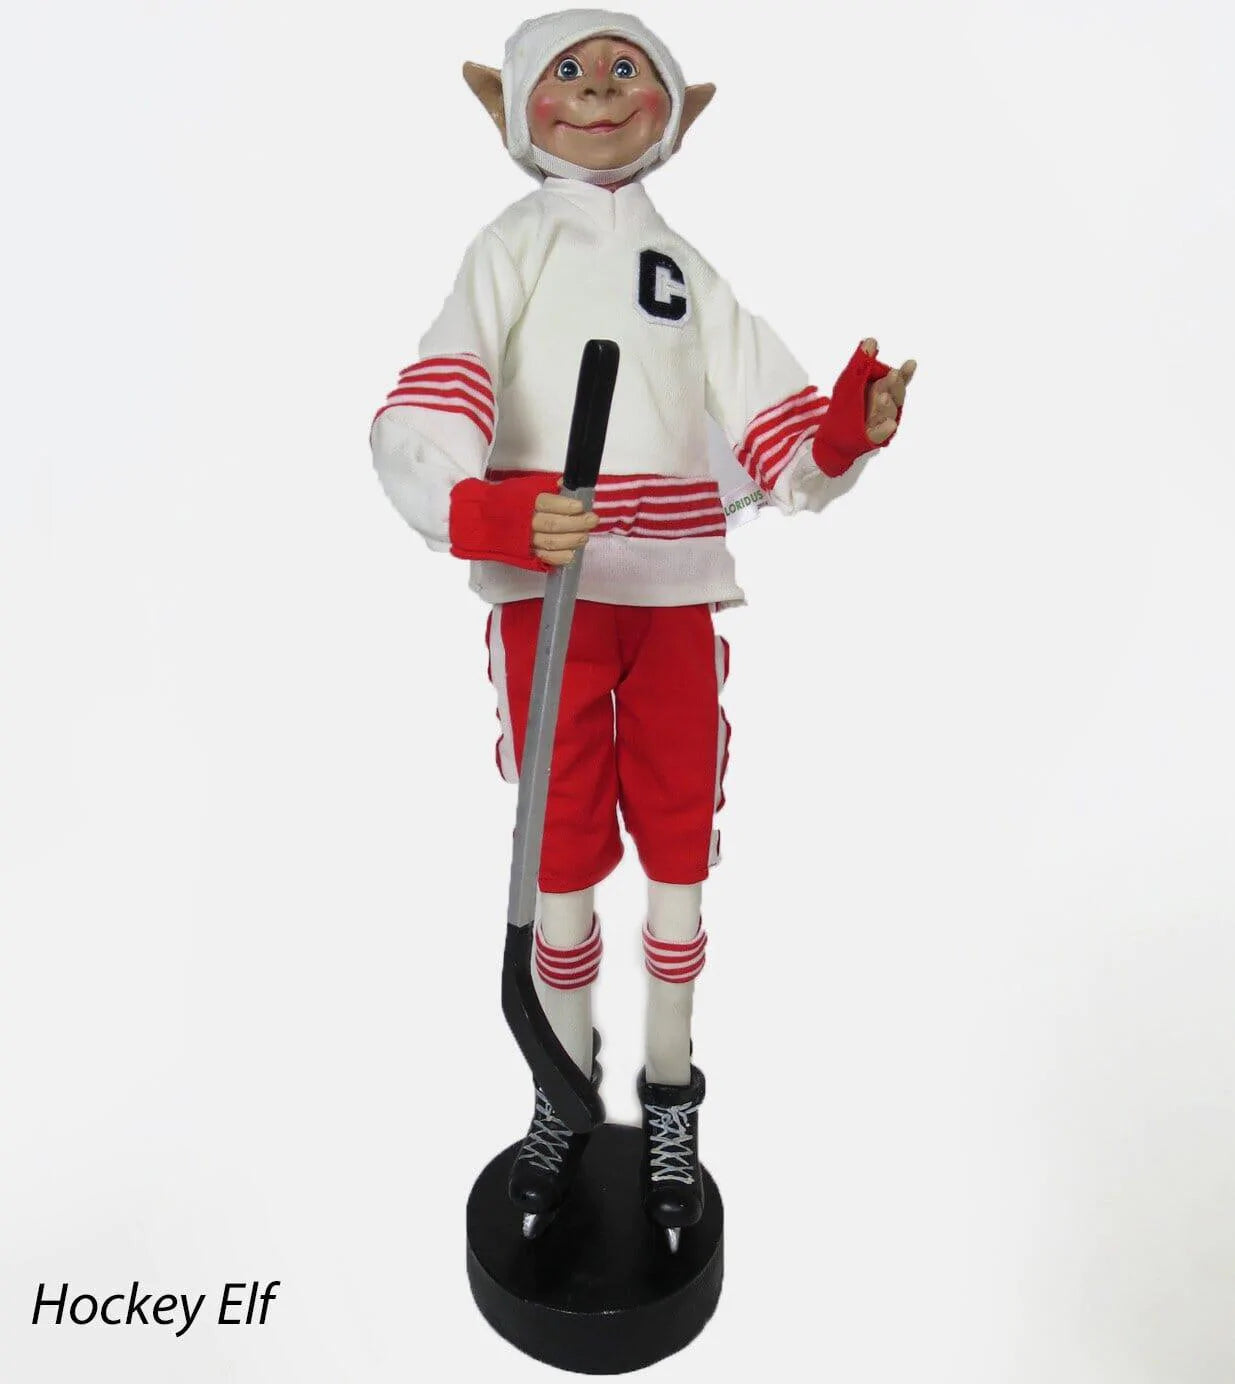 Hockey Elf